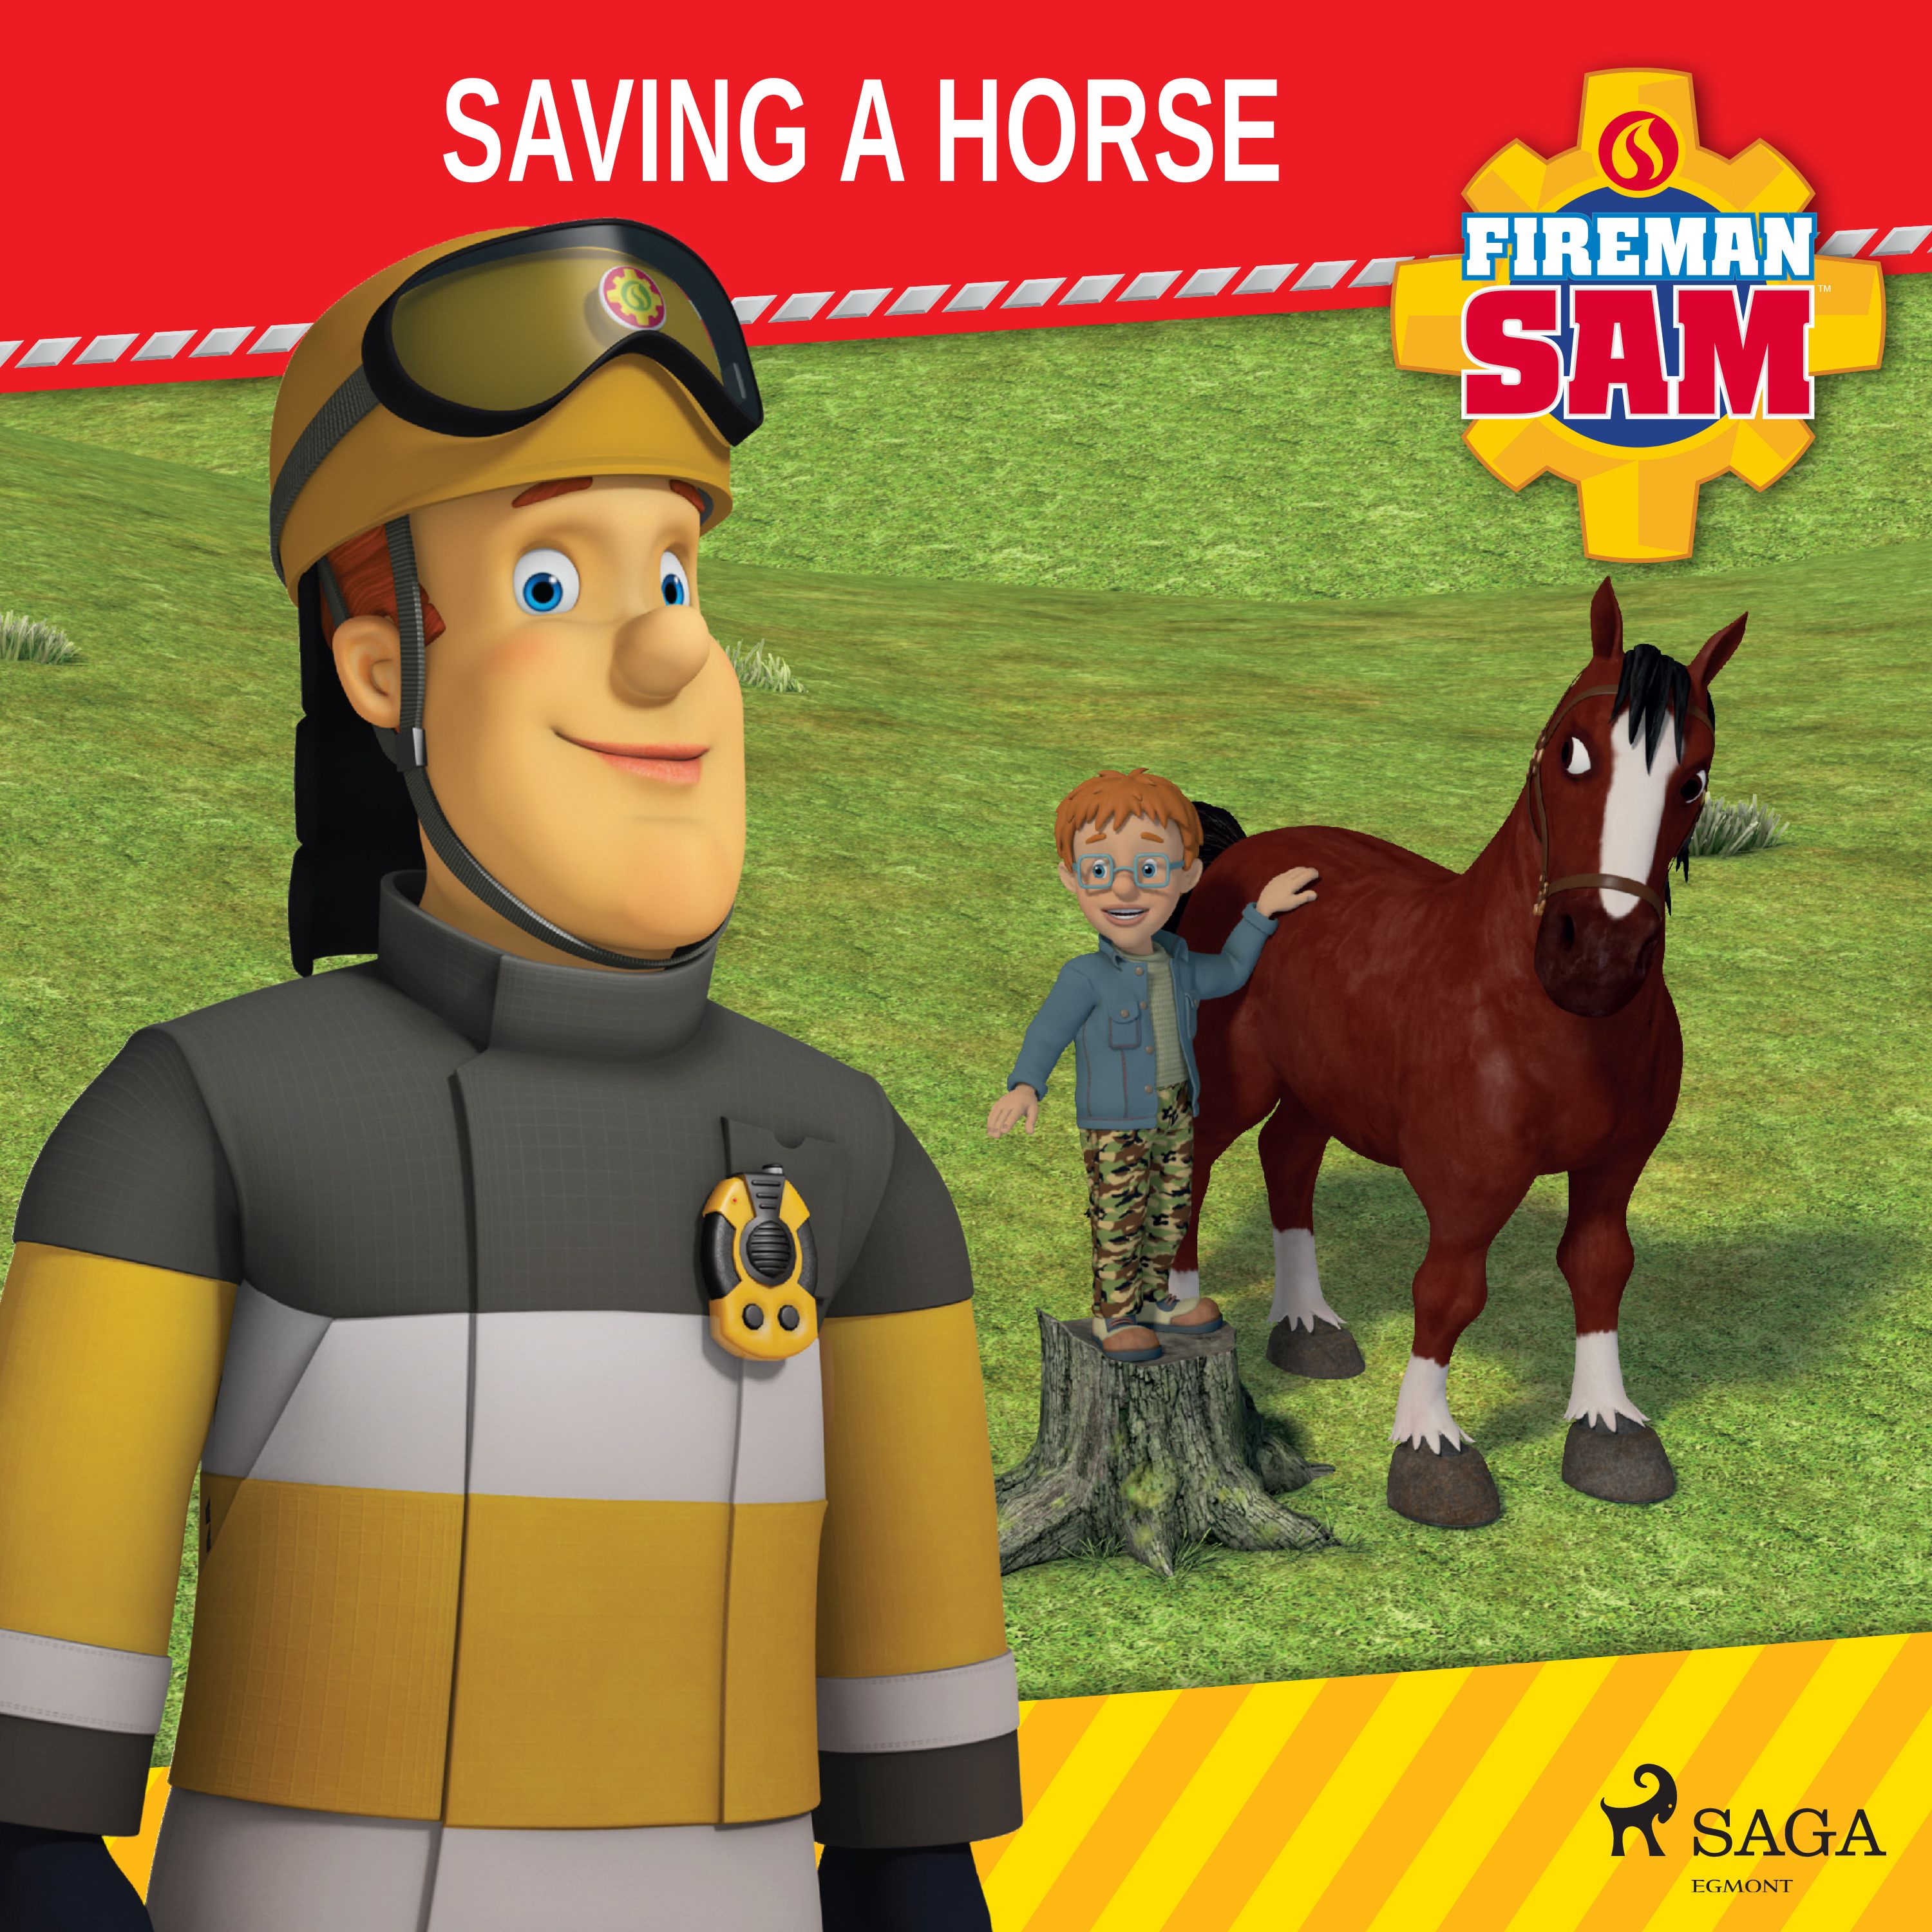 Fireman Sam - Saving a Horse, lydbog af Mattel